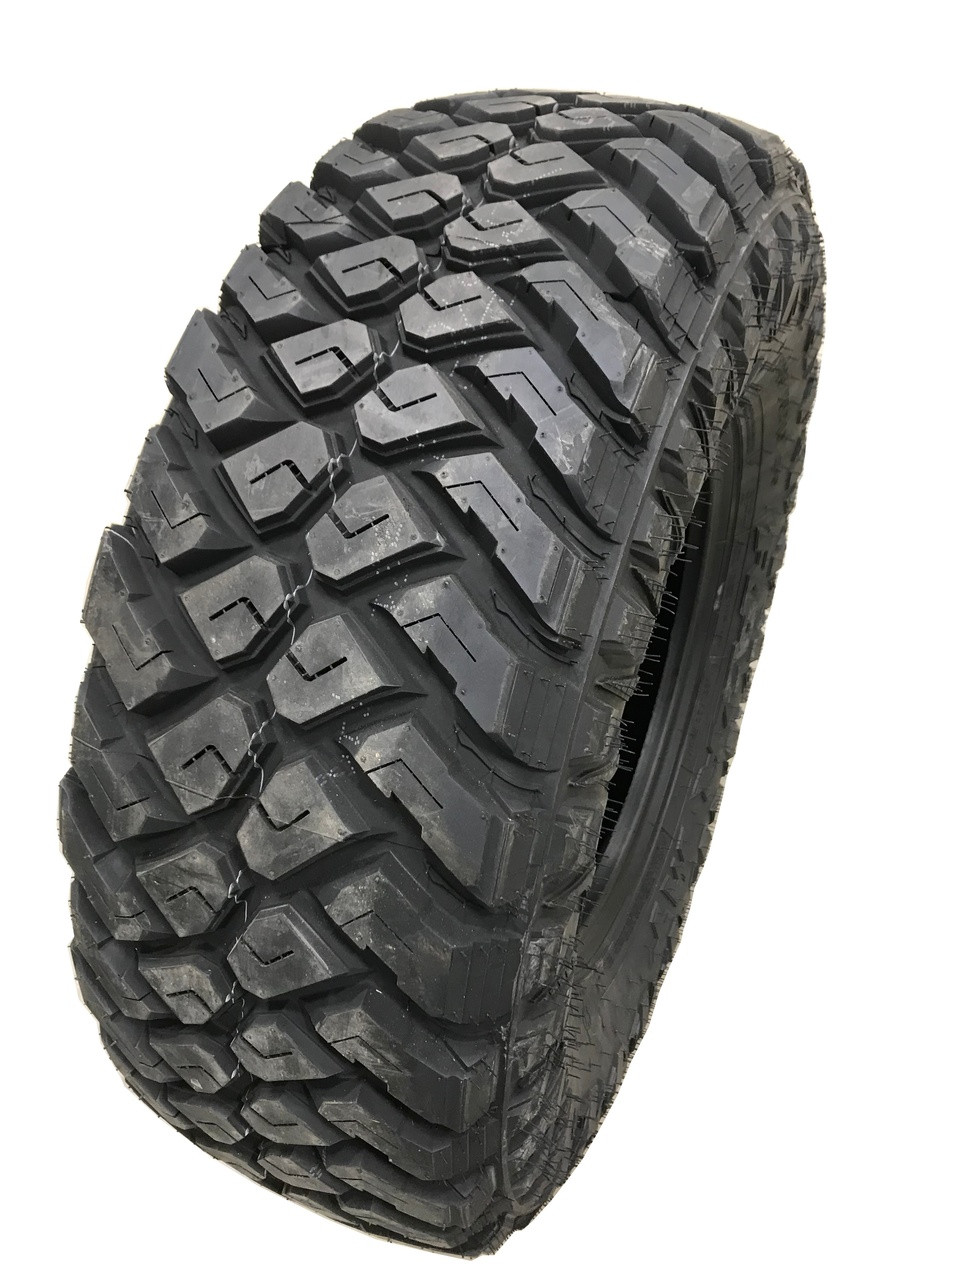 New Tire 285 75 16 Maxxis Razr MT Mud 10 Ply LT285/75R16 40,000 Mile Warranty